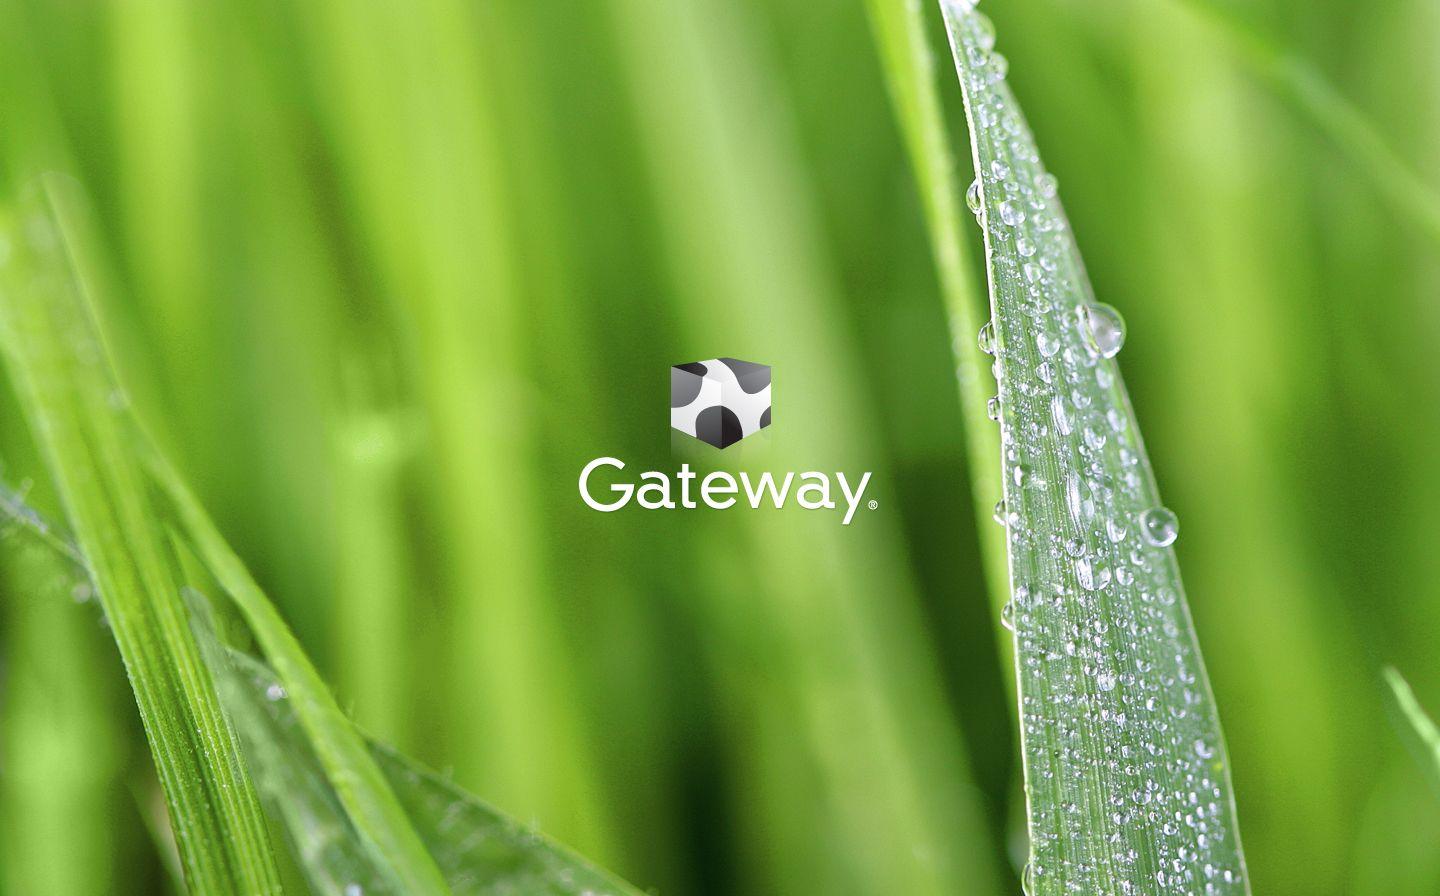 Gateway Wallpaper, HDQ Beautiful Gateway Image & Wallpaper